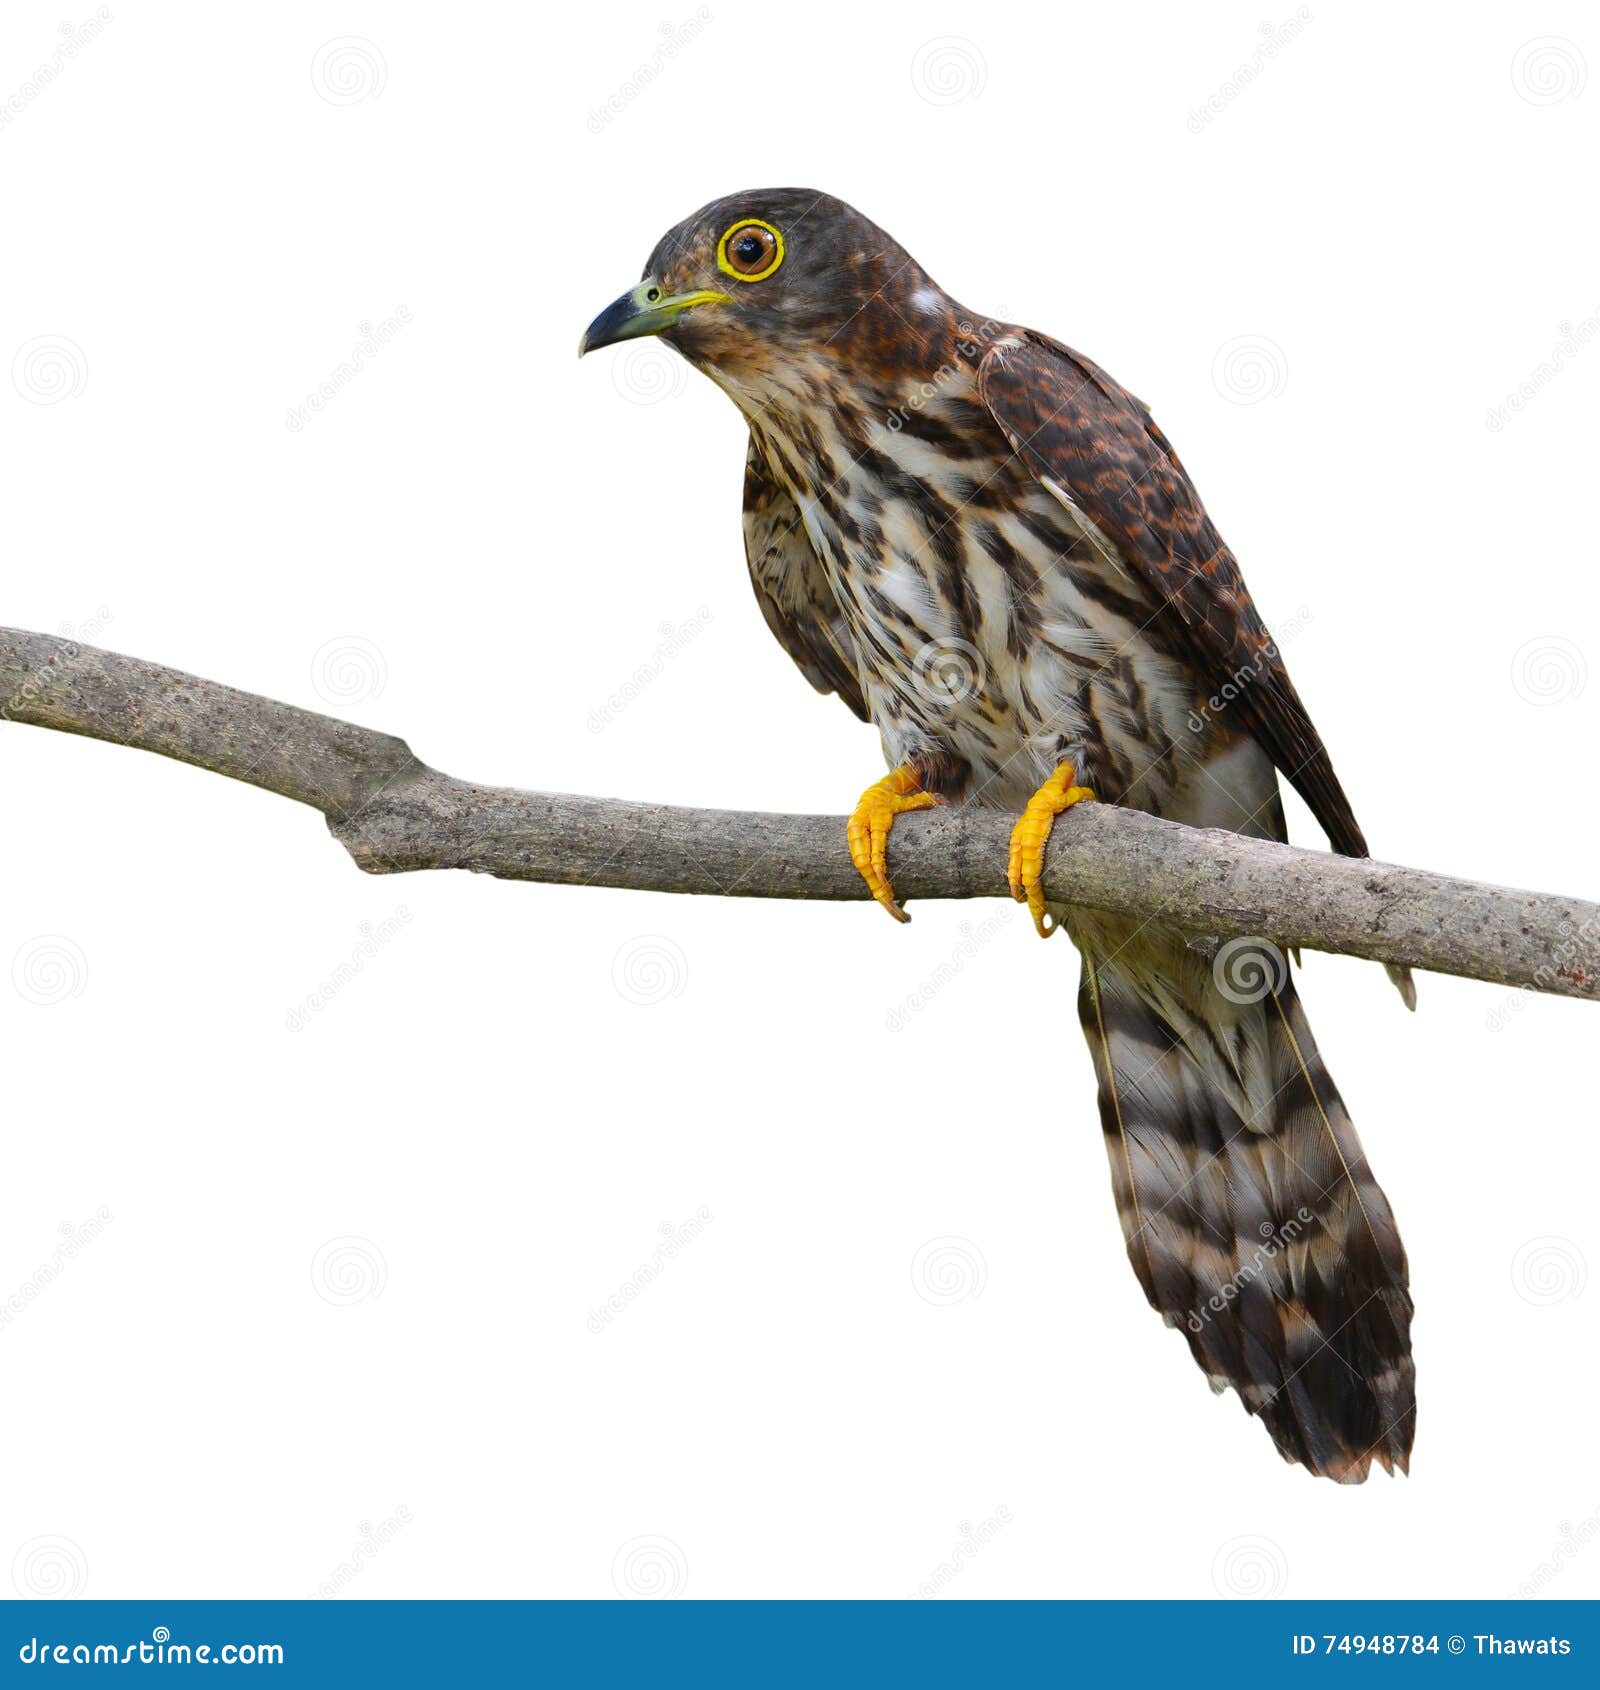 hodgson's hawk cuckoo bird